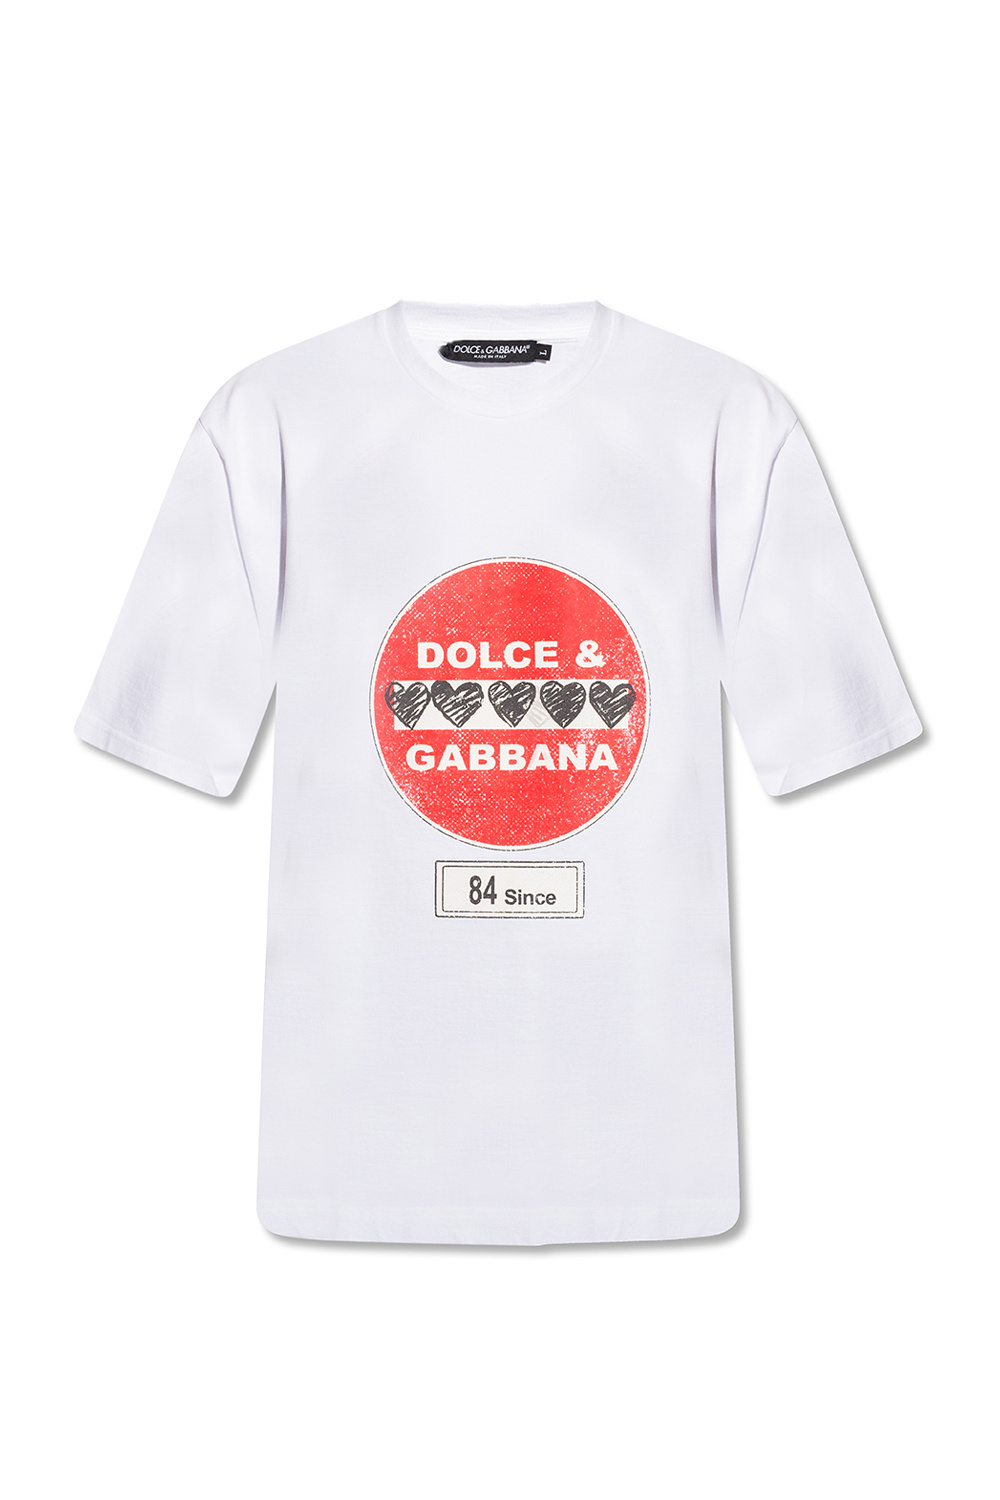 Dolce & Gabbana Printed T-shirt | Men's Clothing | Vitkac